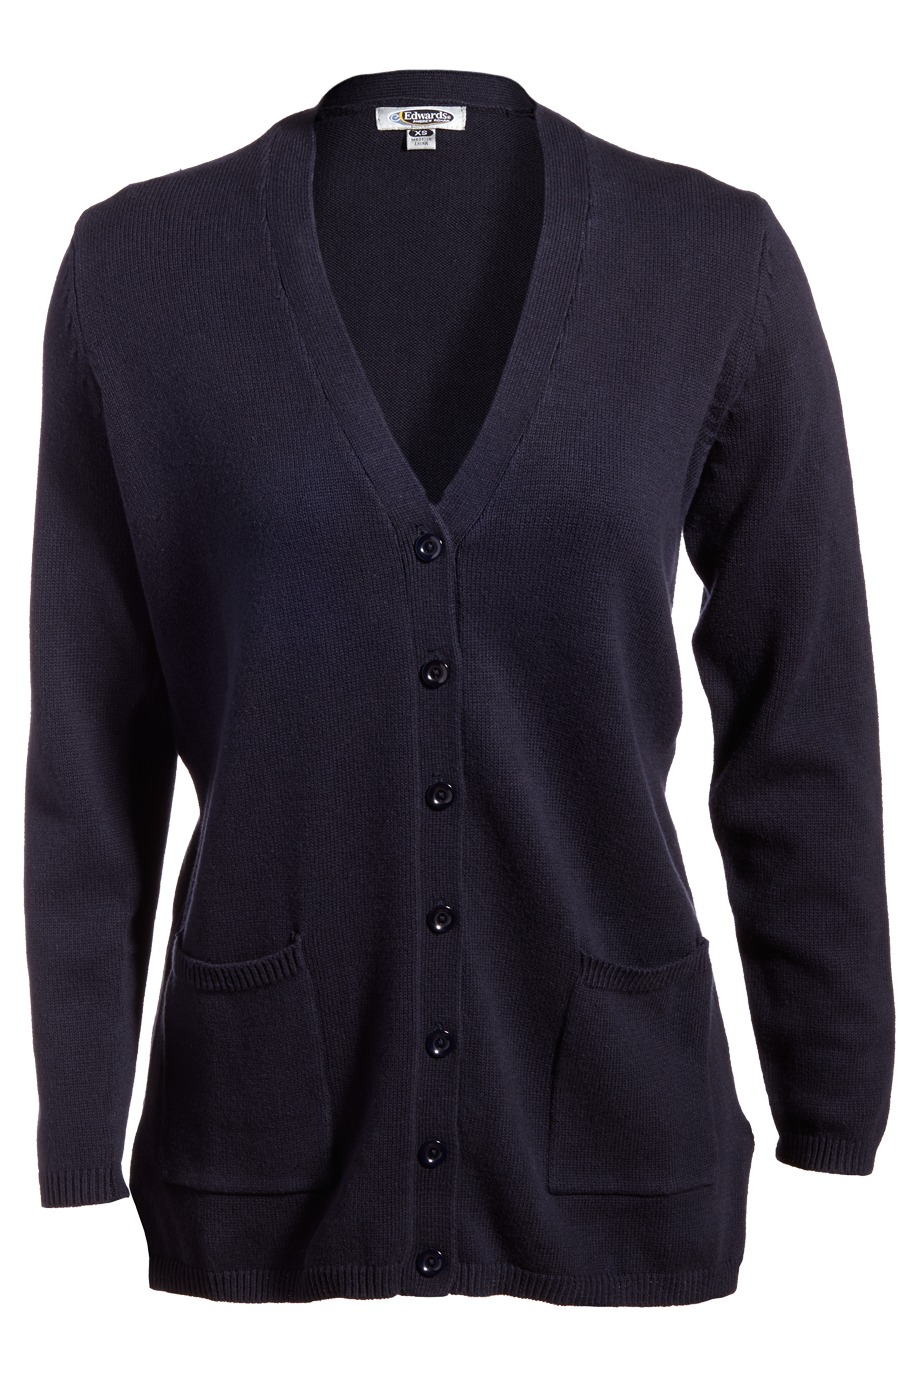 Edwards Garment 119 - Women's V-Neck Long Cardigan